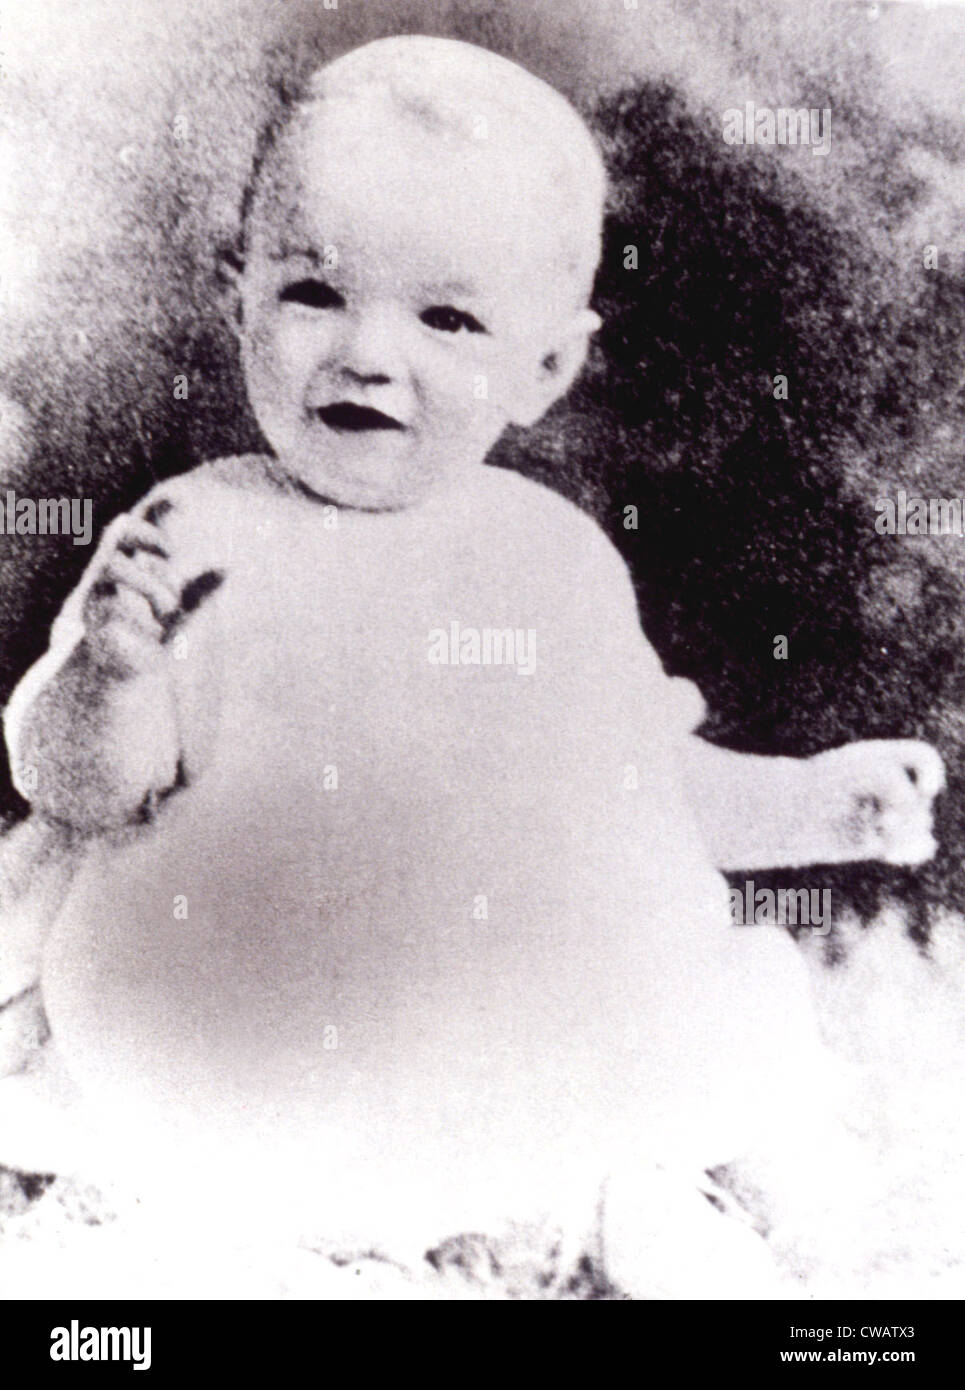 Marilyn Monroe als Kleinkind, ca. 1926 Stockfoto